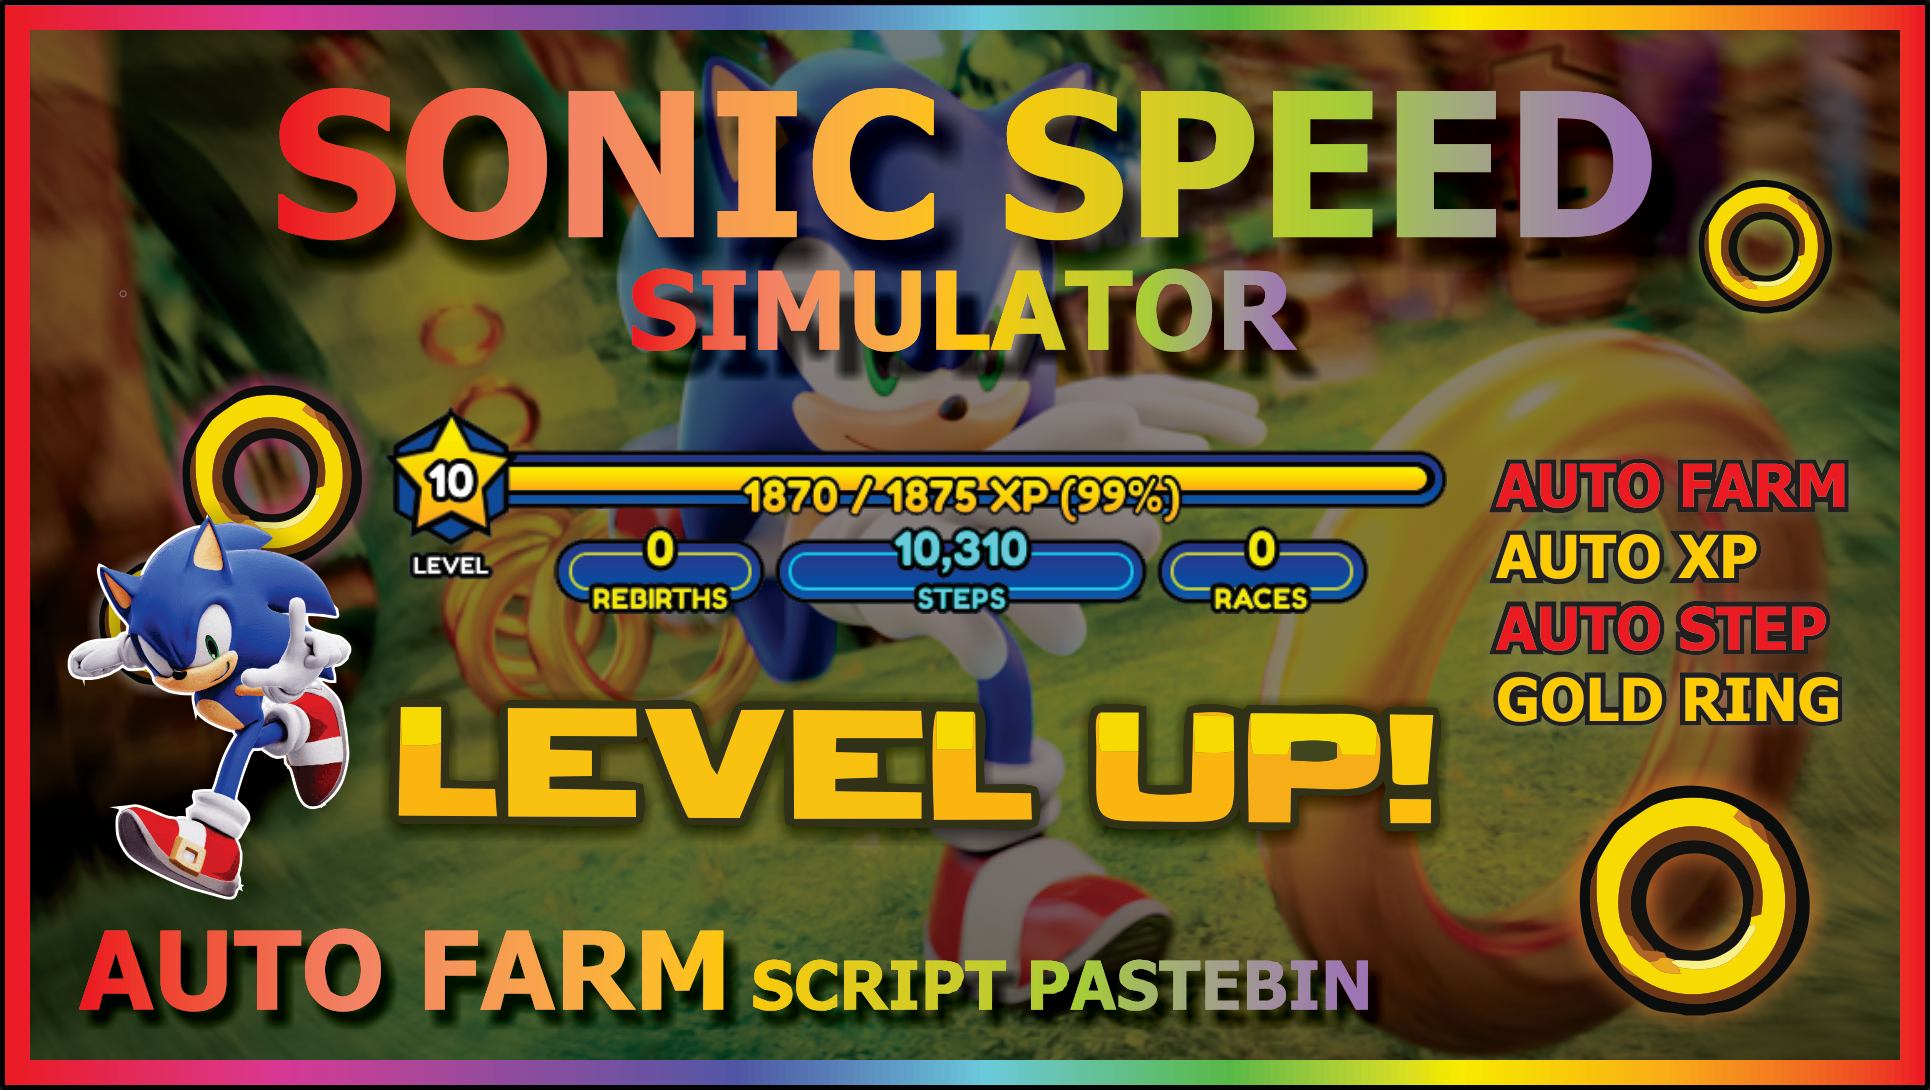 Catalyst Hub Sonic Speed Simulator Script Download Now 100% Free